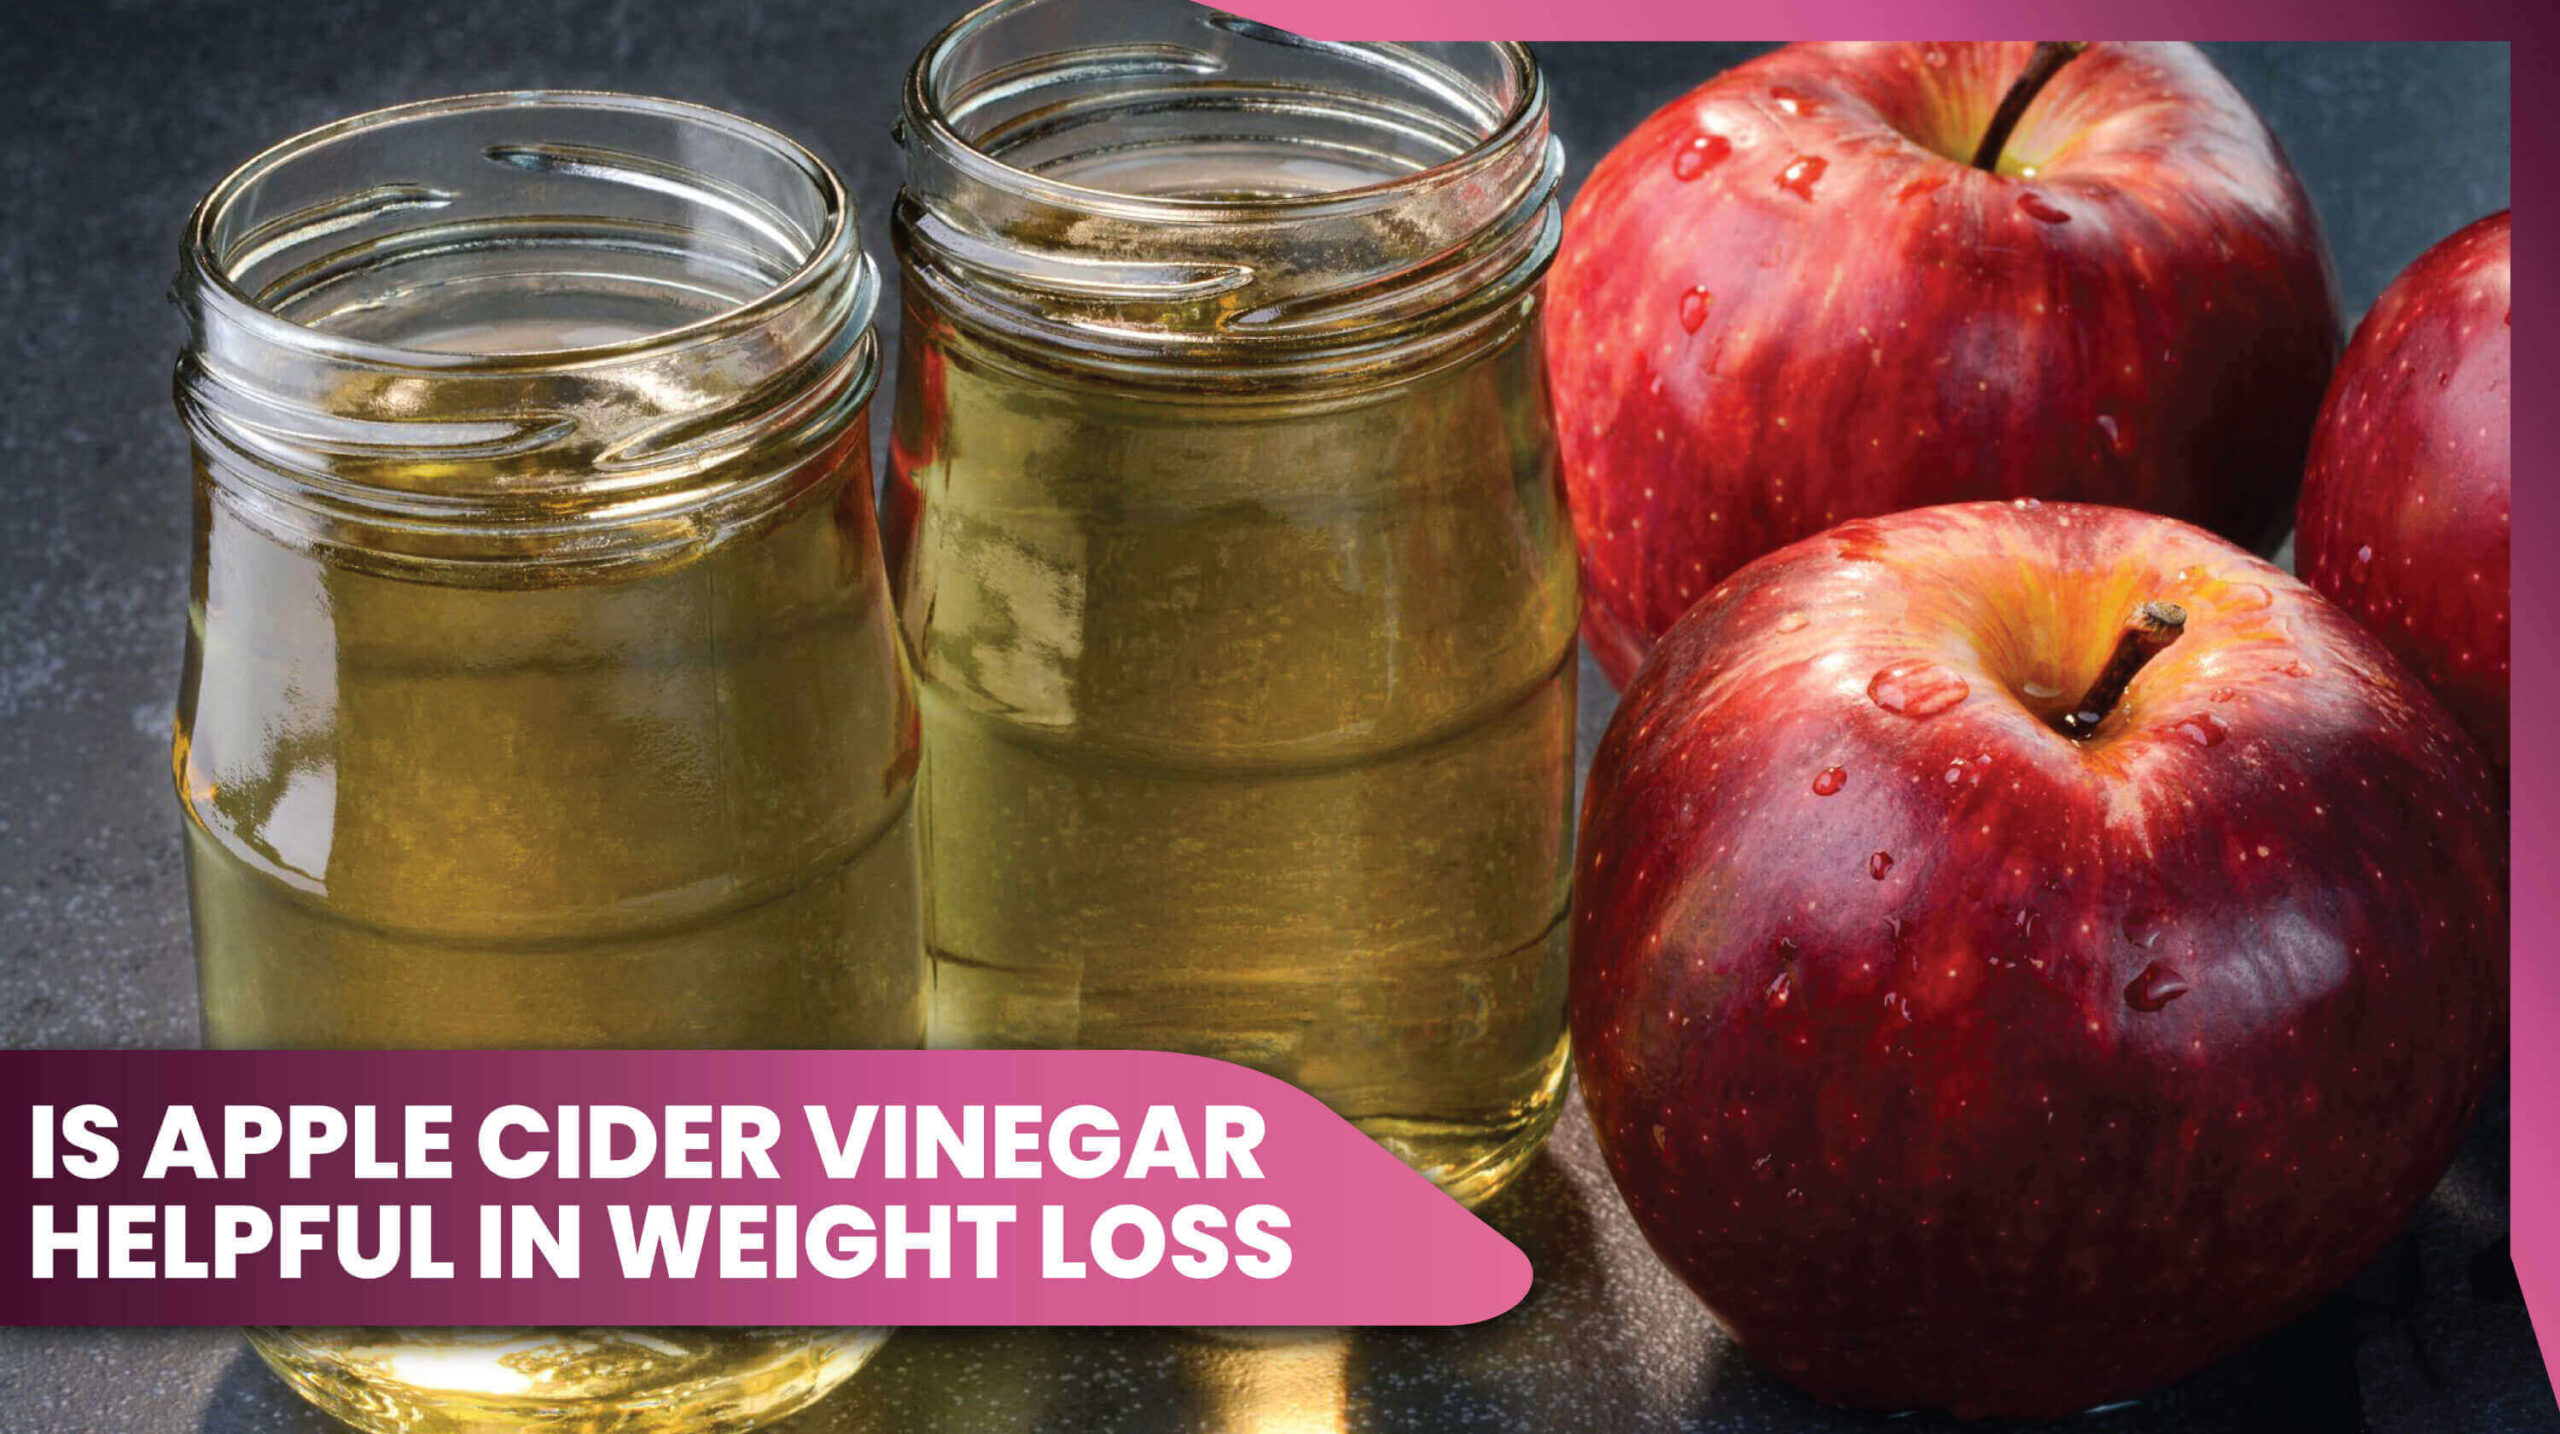 11is apple cider vinegar helpful in weight loss